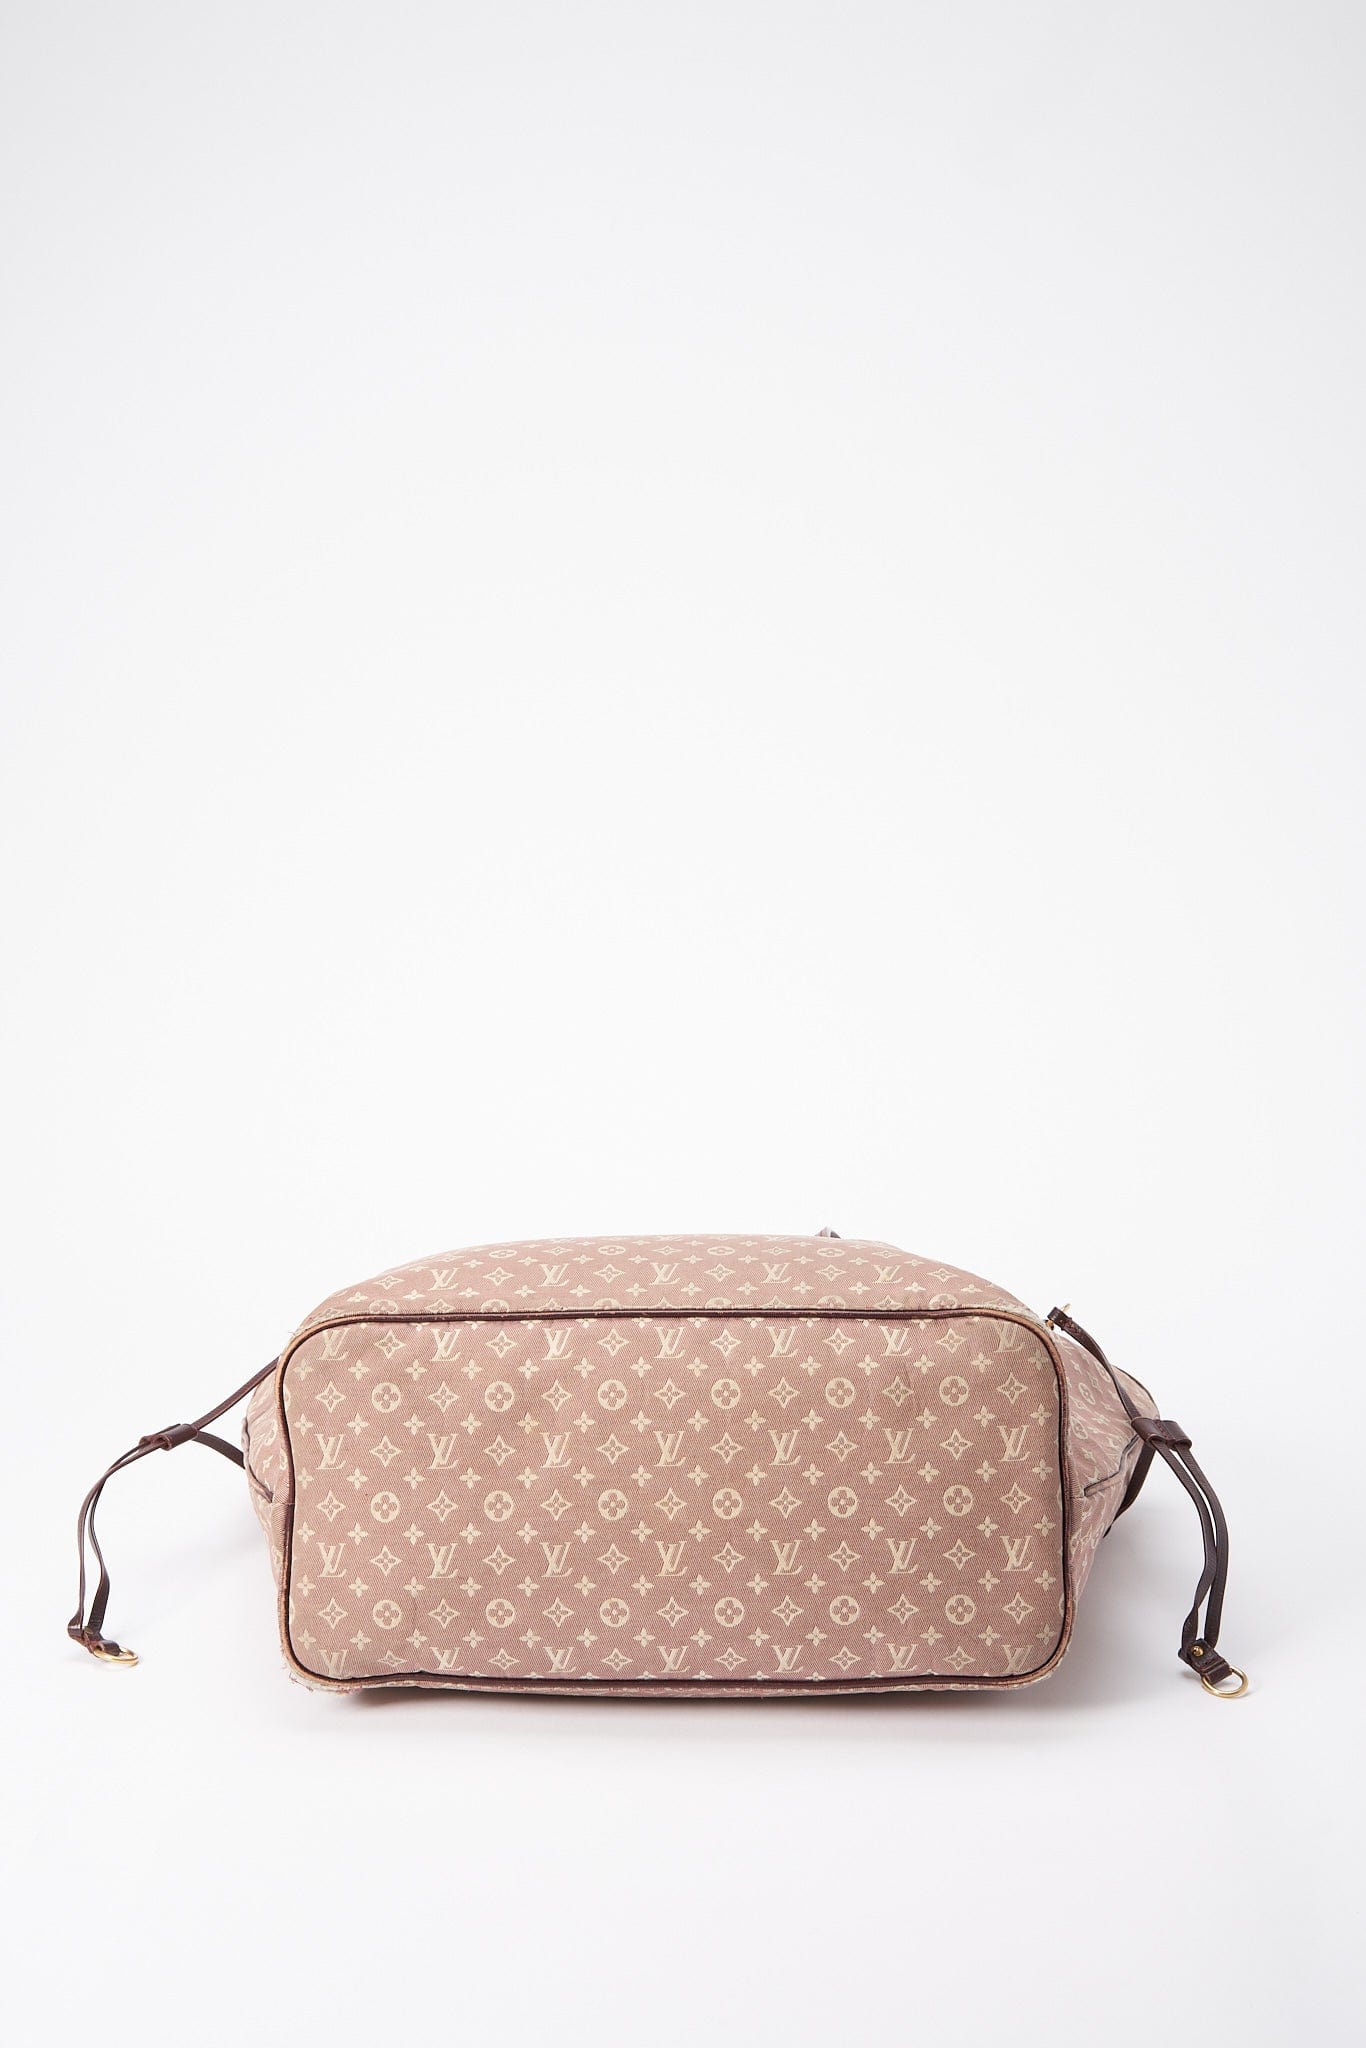 Louis Vuitton monogram Neverfull mm - Women's Handbags - San Ramon